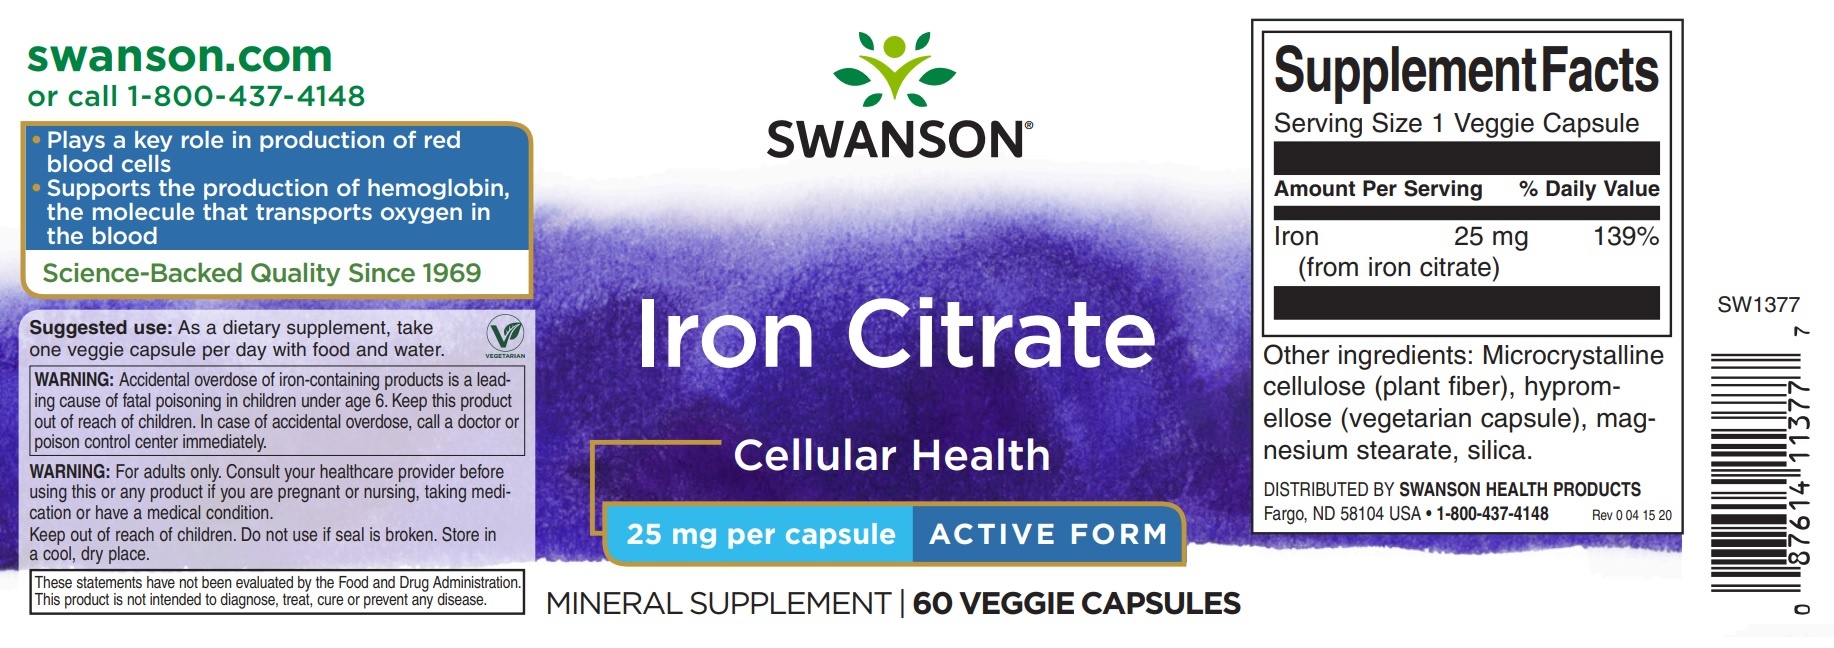 Swanson Iron Citrate, 25 mg, 60 Veg Caps